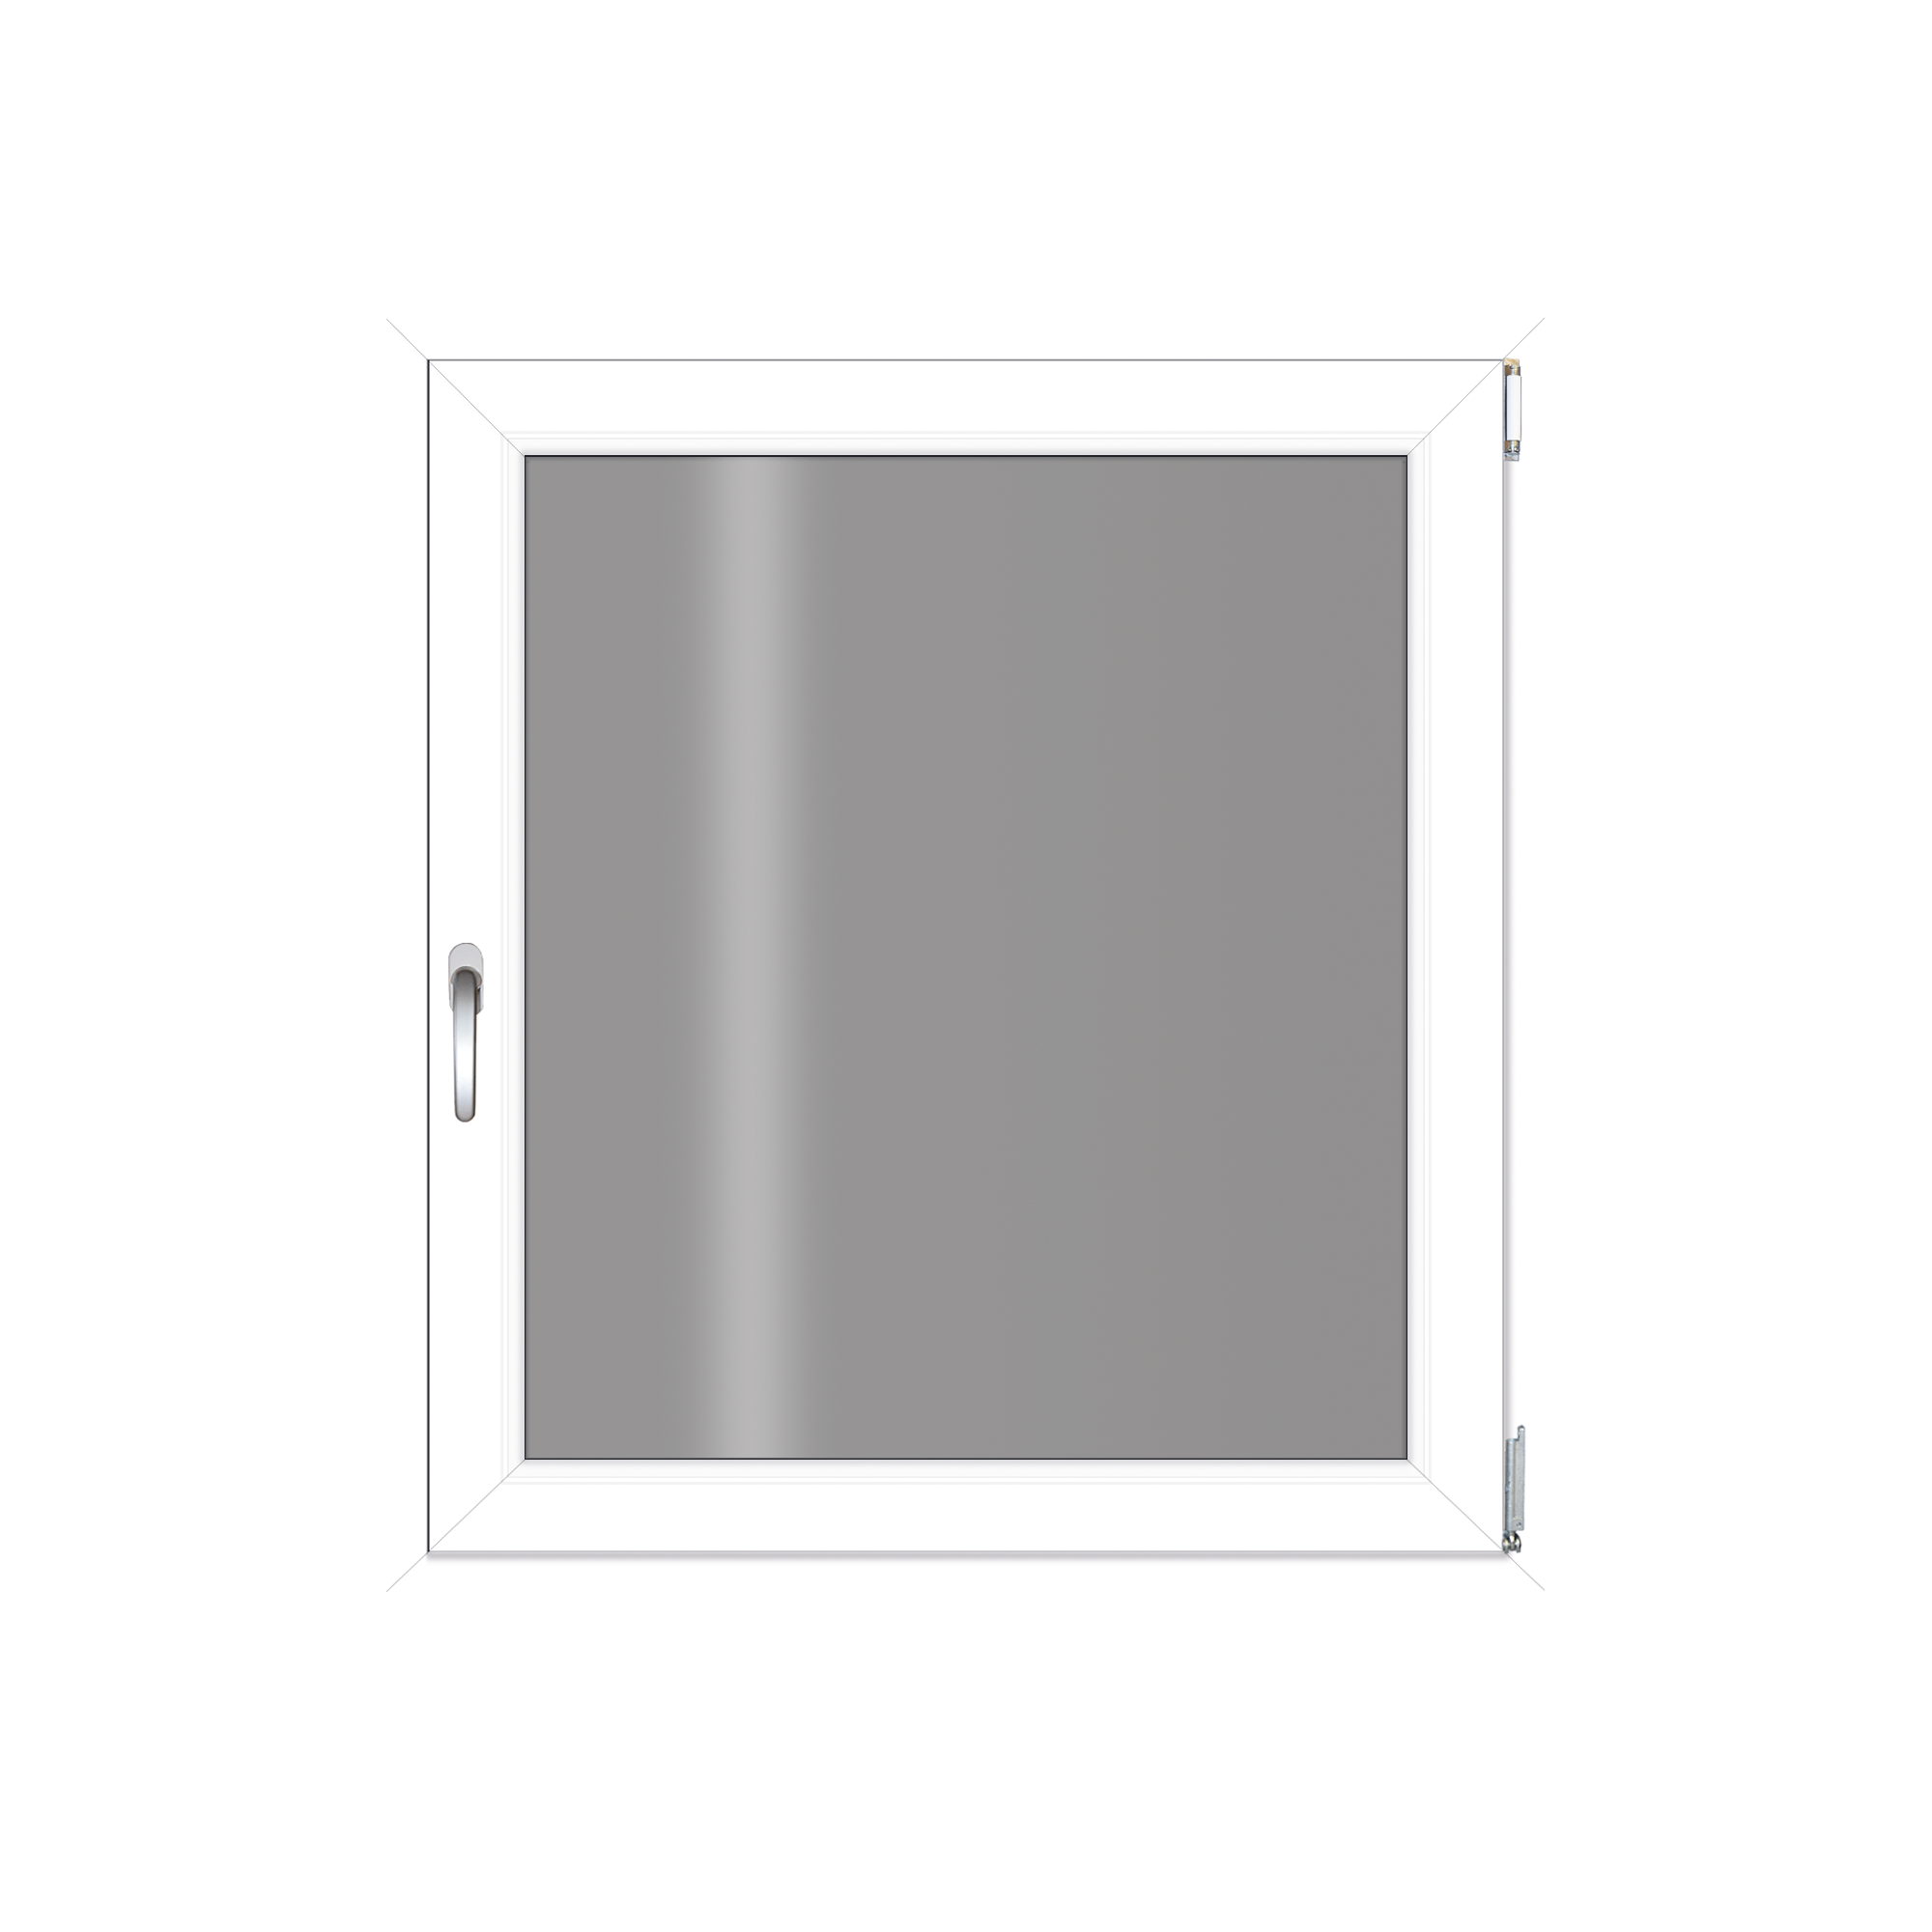 Kunststofffenster 900 x 1200 mm weiß DIN rechts + product picture